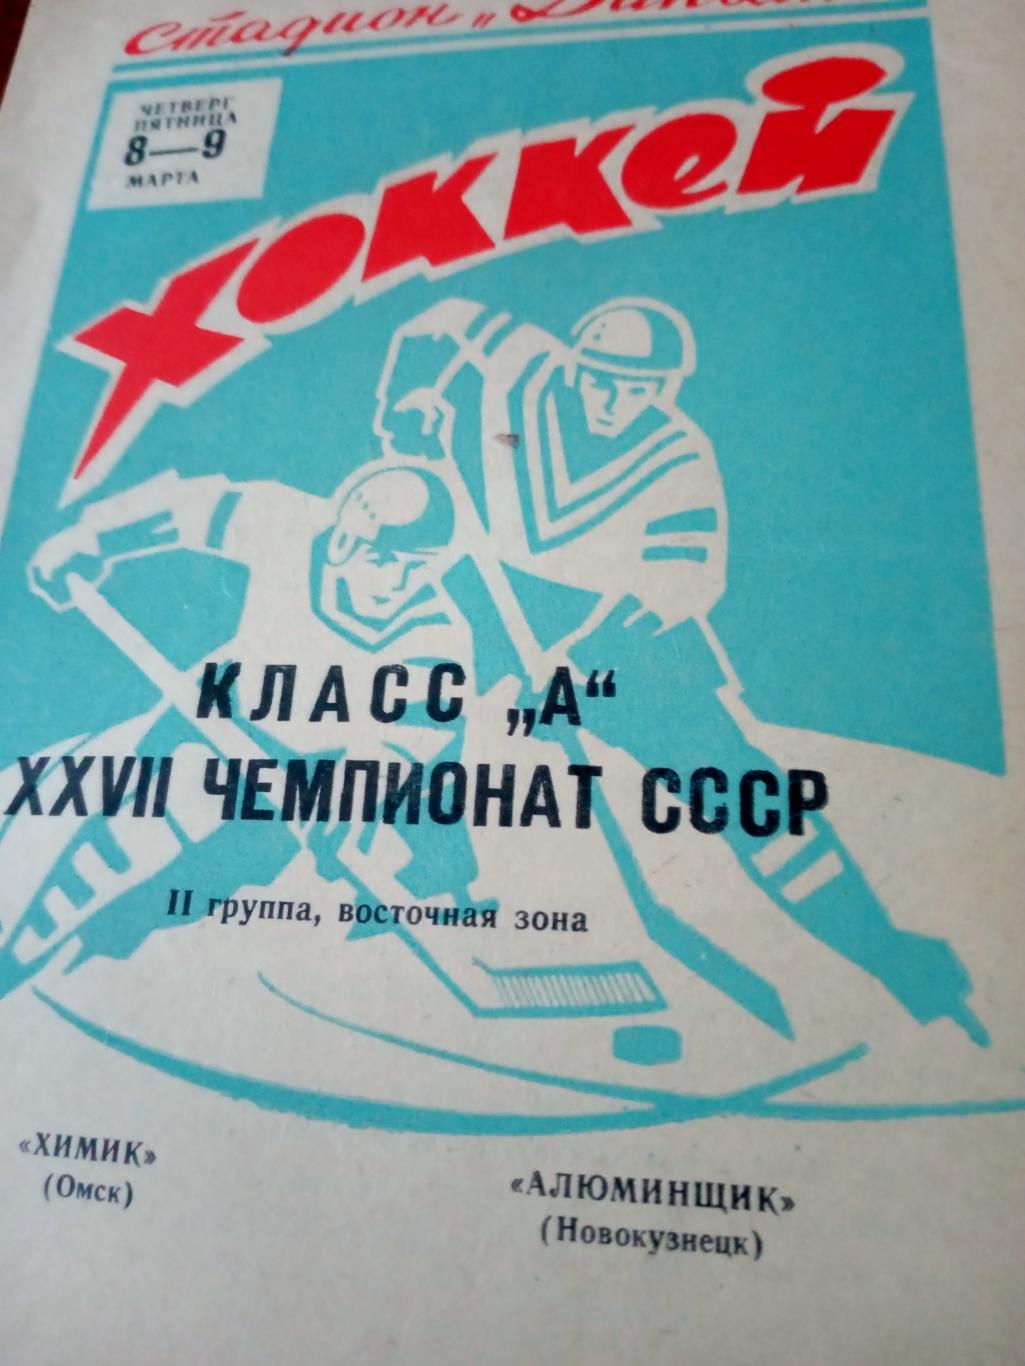 Химик Омск - Алюминщик Новокузнецк. 8 и 9 марта 1973 год